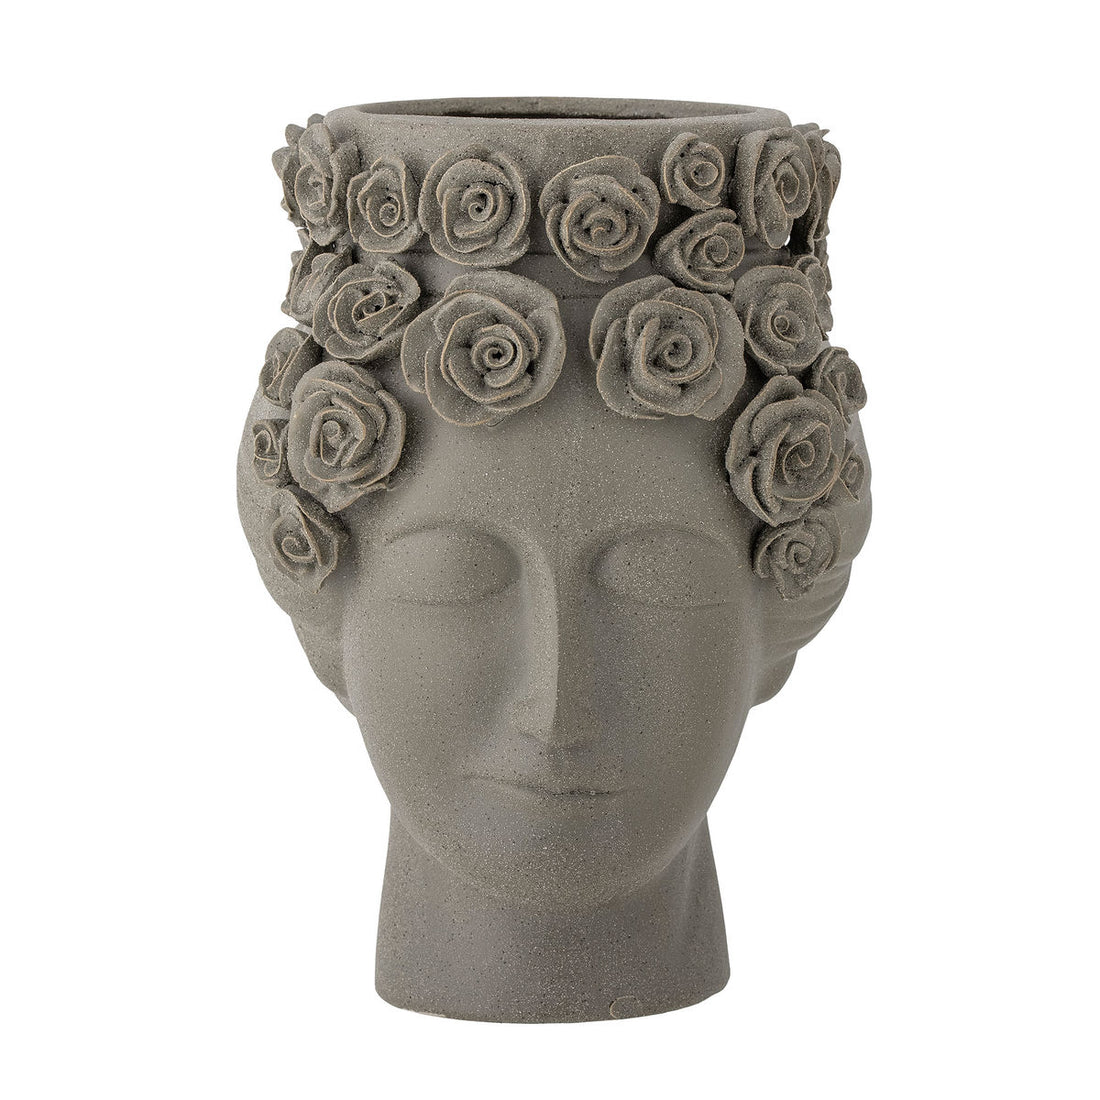 Bloomingville Akira vase, gray, stoneware